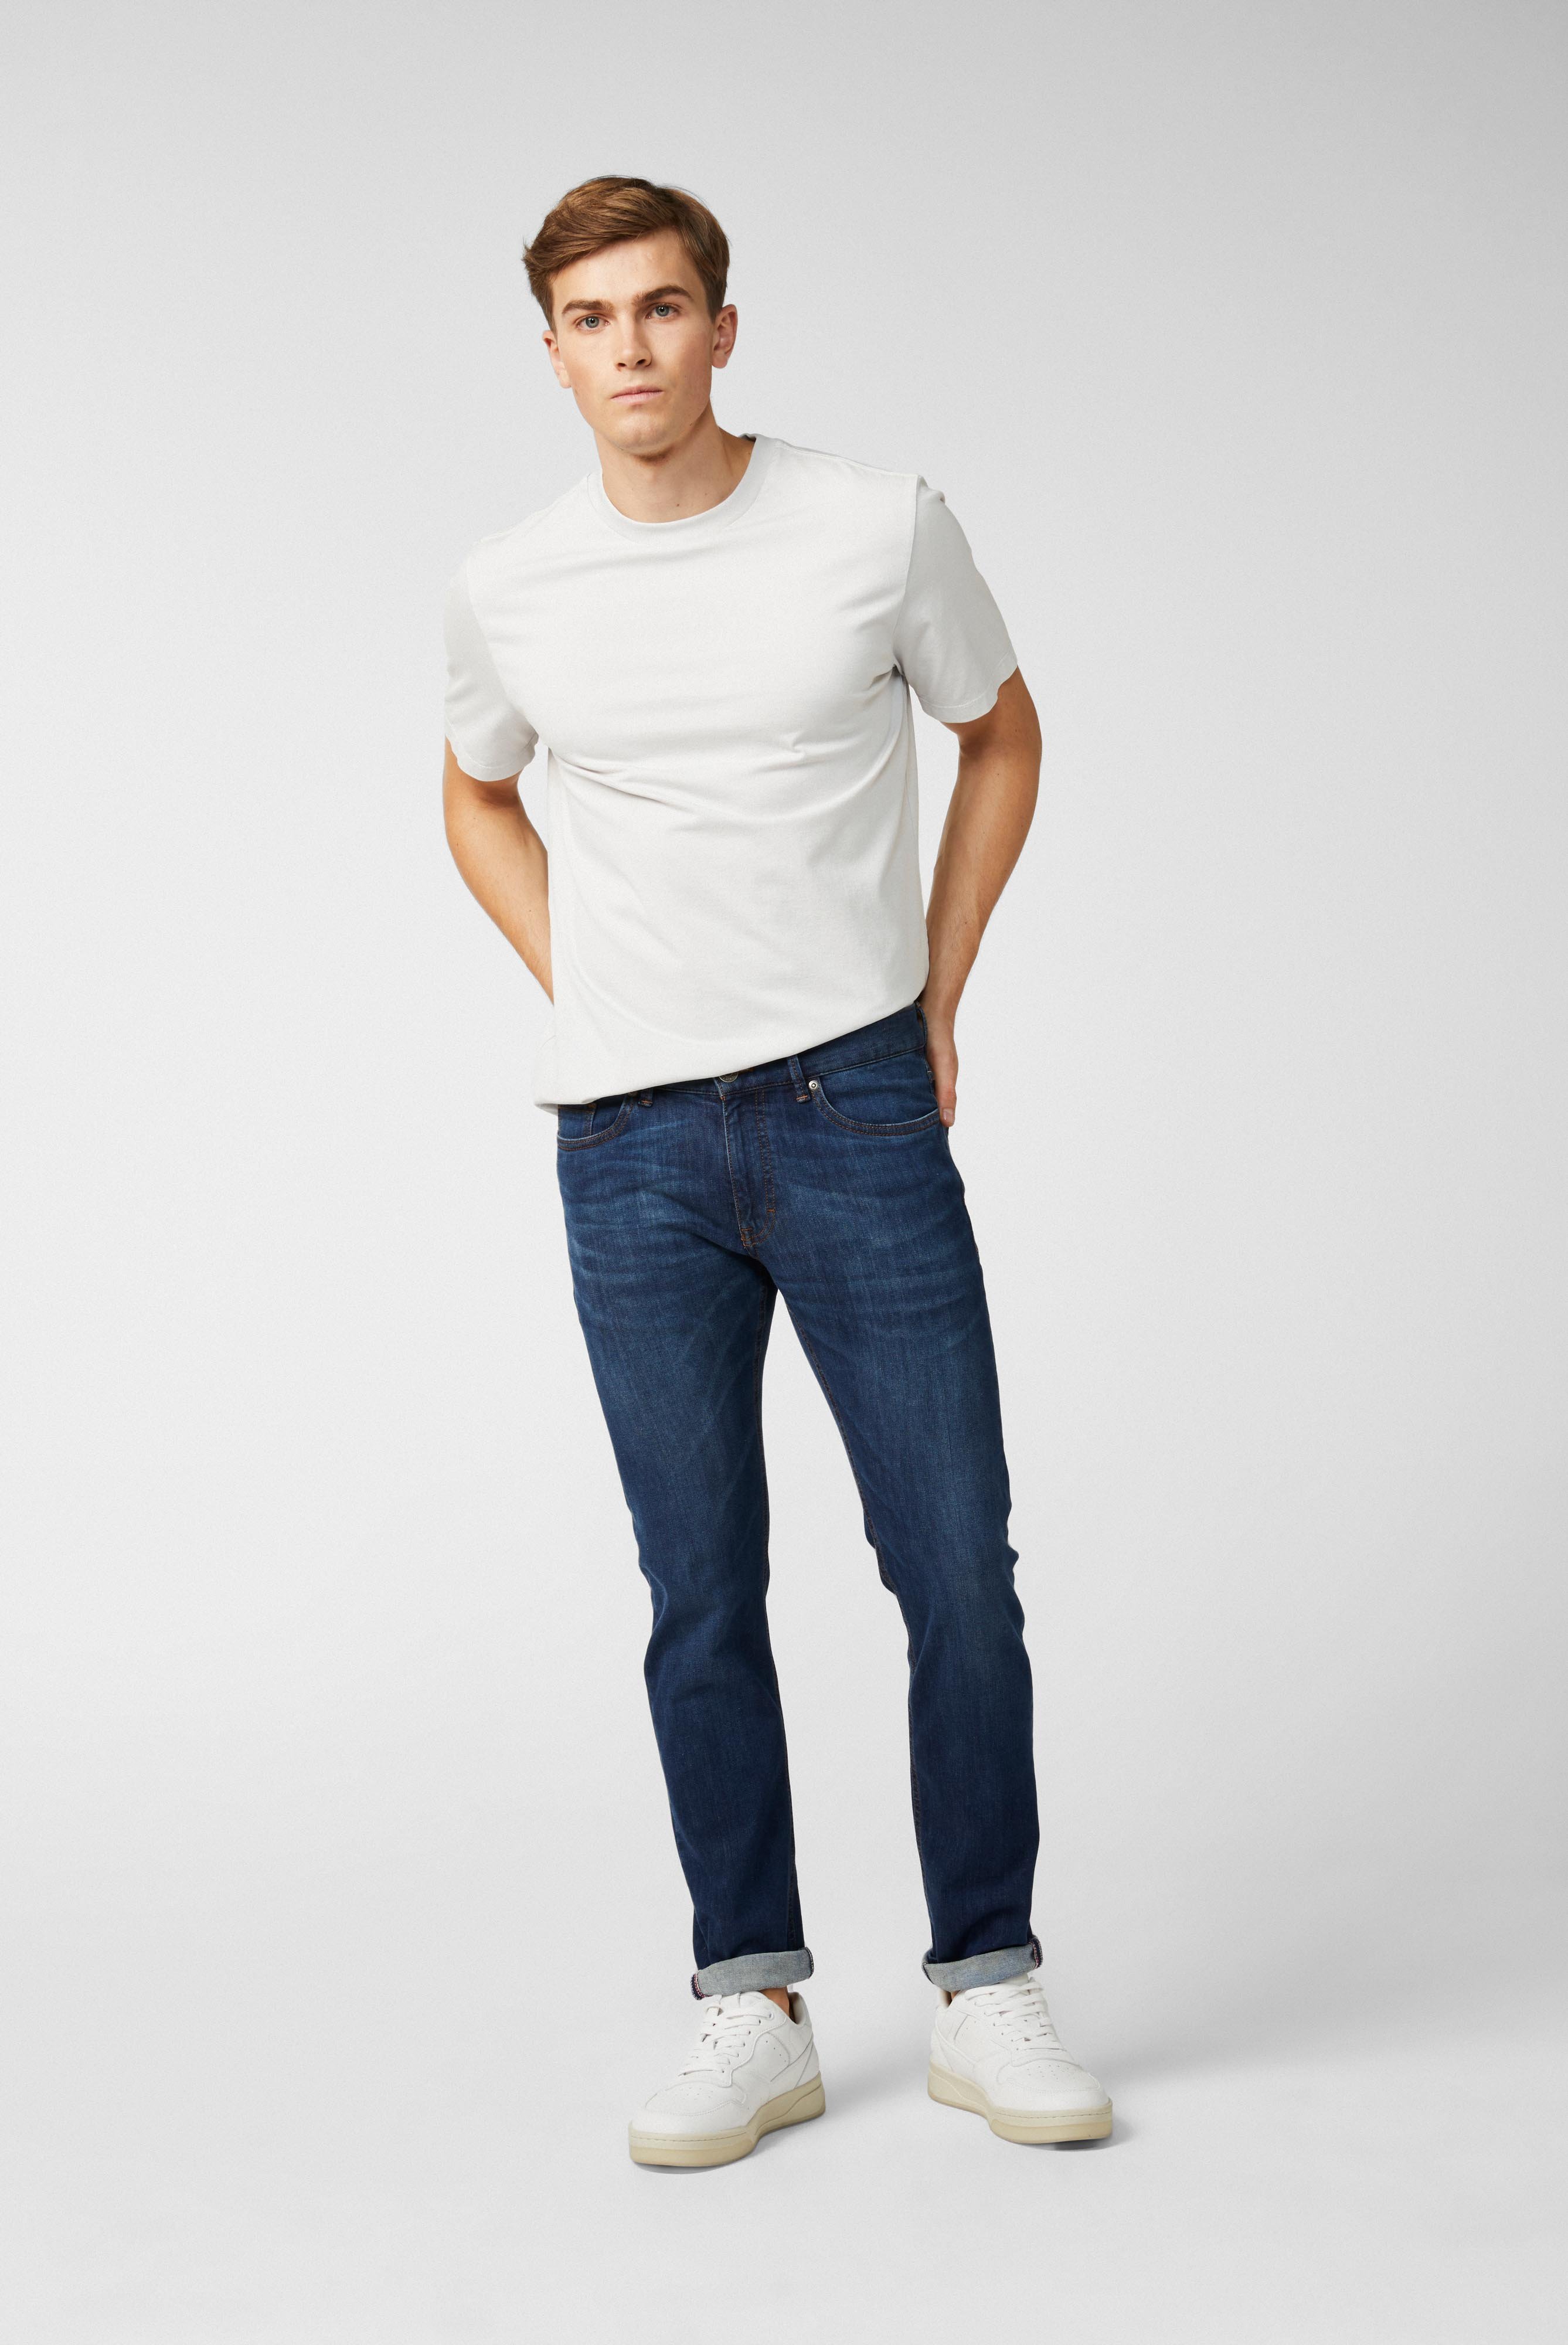 Jeans & Hosen+Jeanshose mit Streth Slim Fit+80.7857..J00117.780.32N